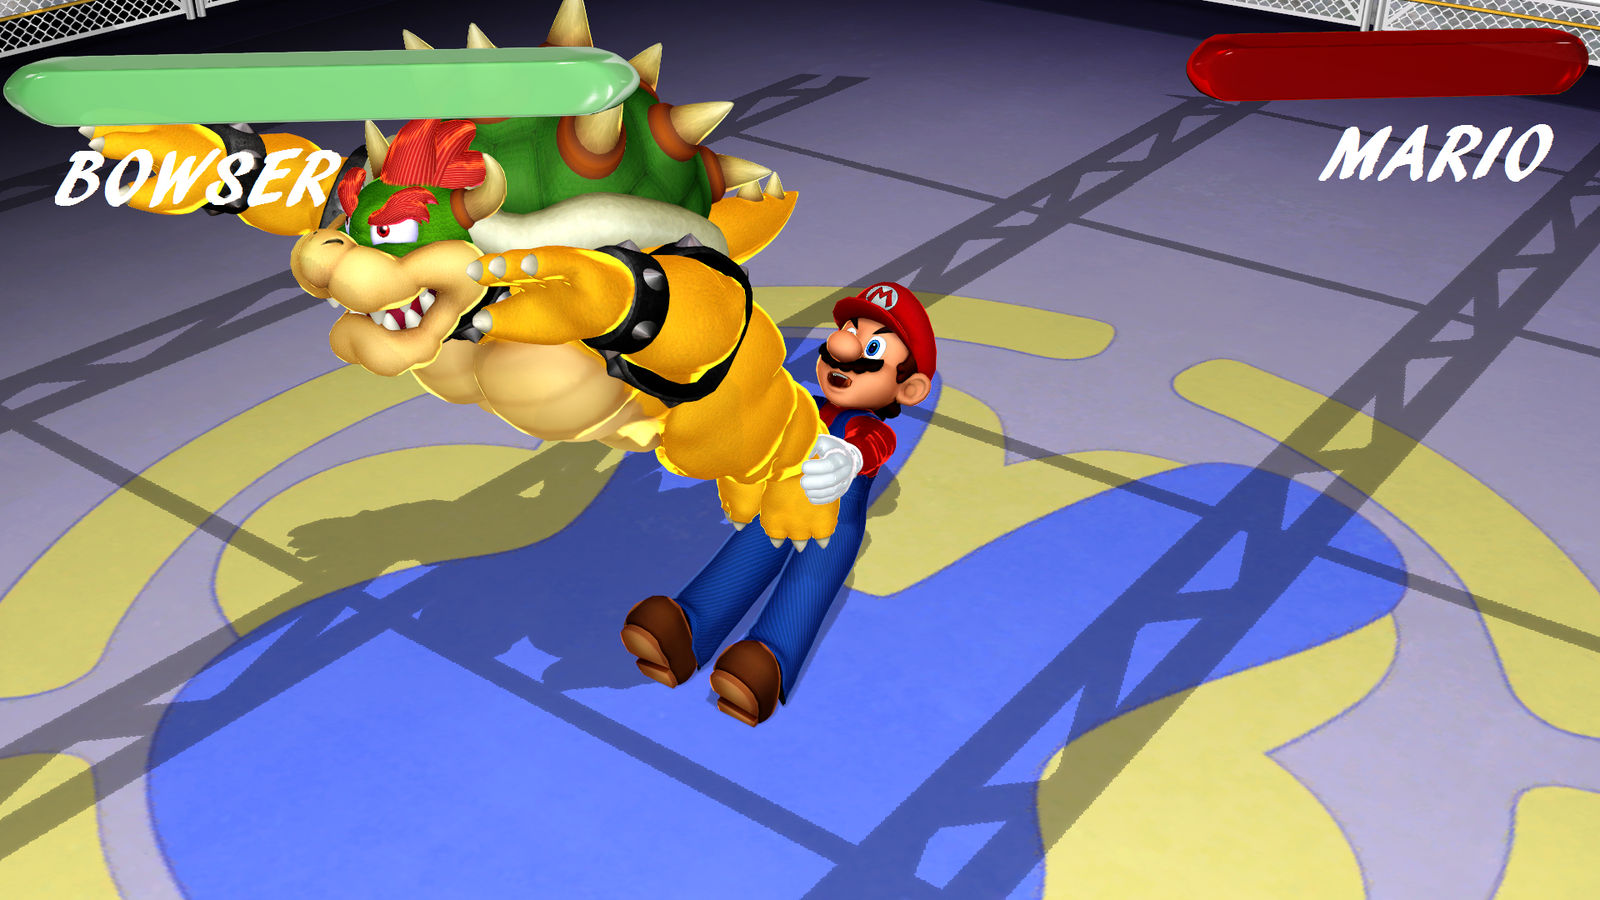 Mario Luigi Bowsers inside story Final Battle by bluelover37 on DeviantArt